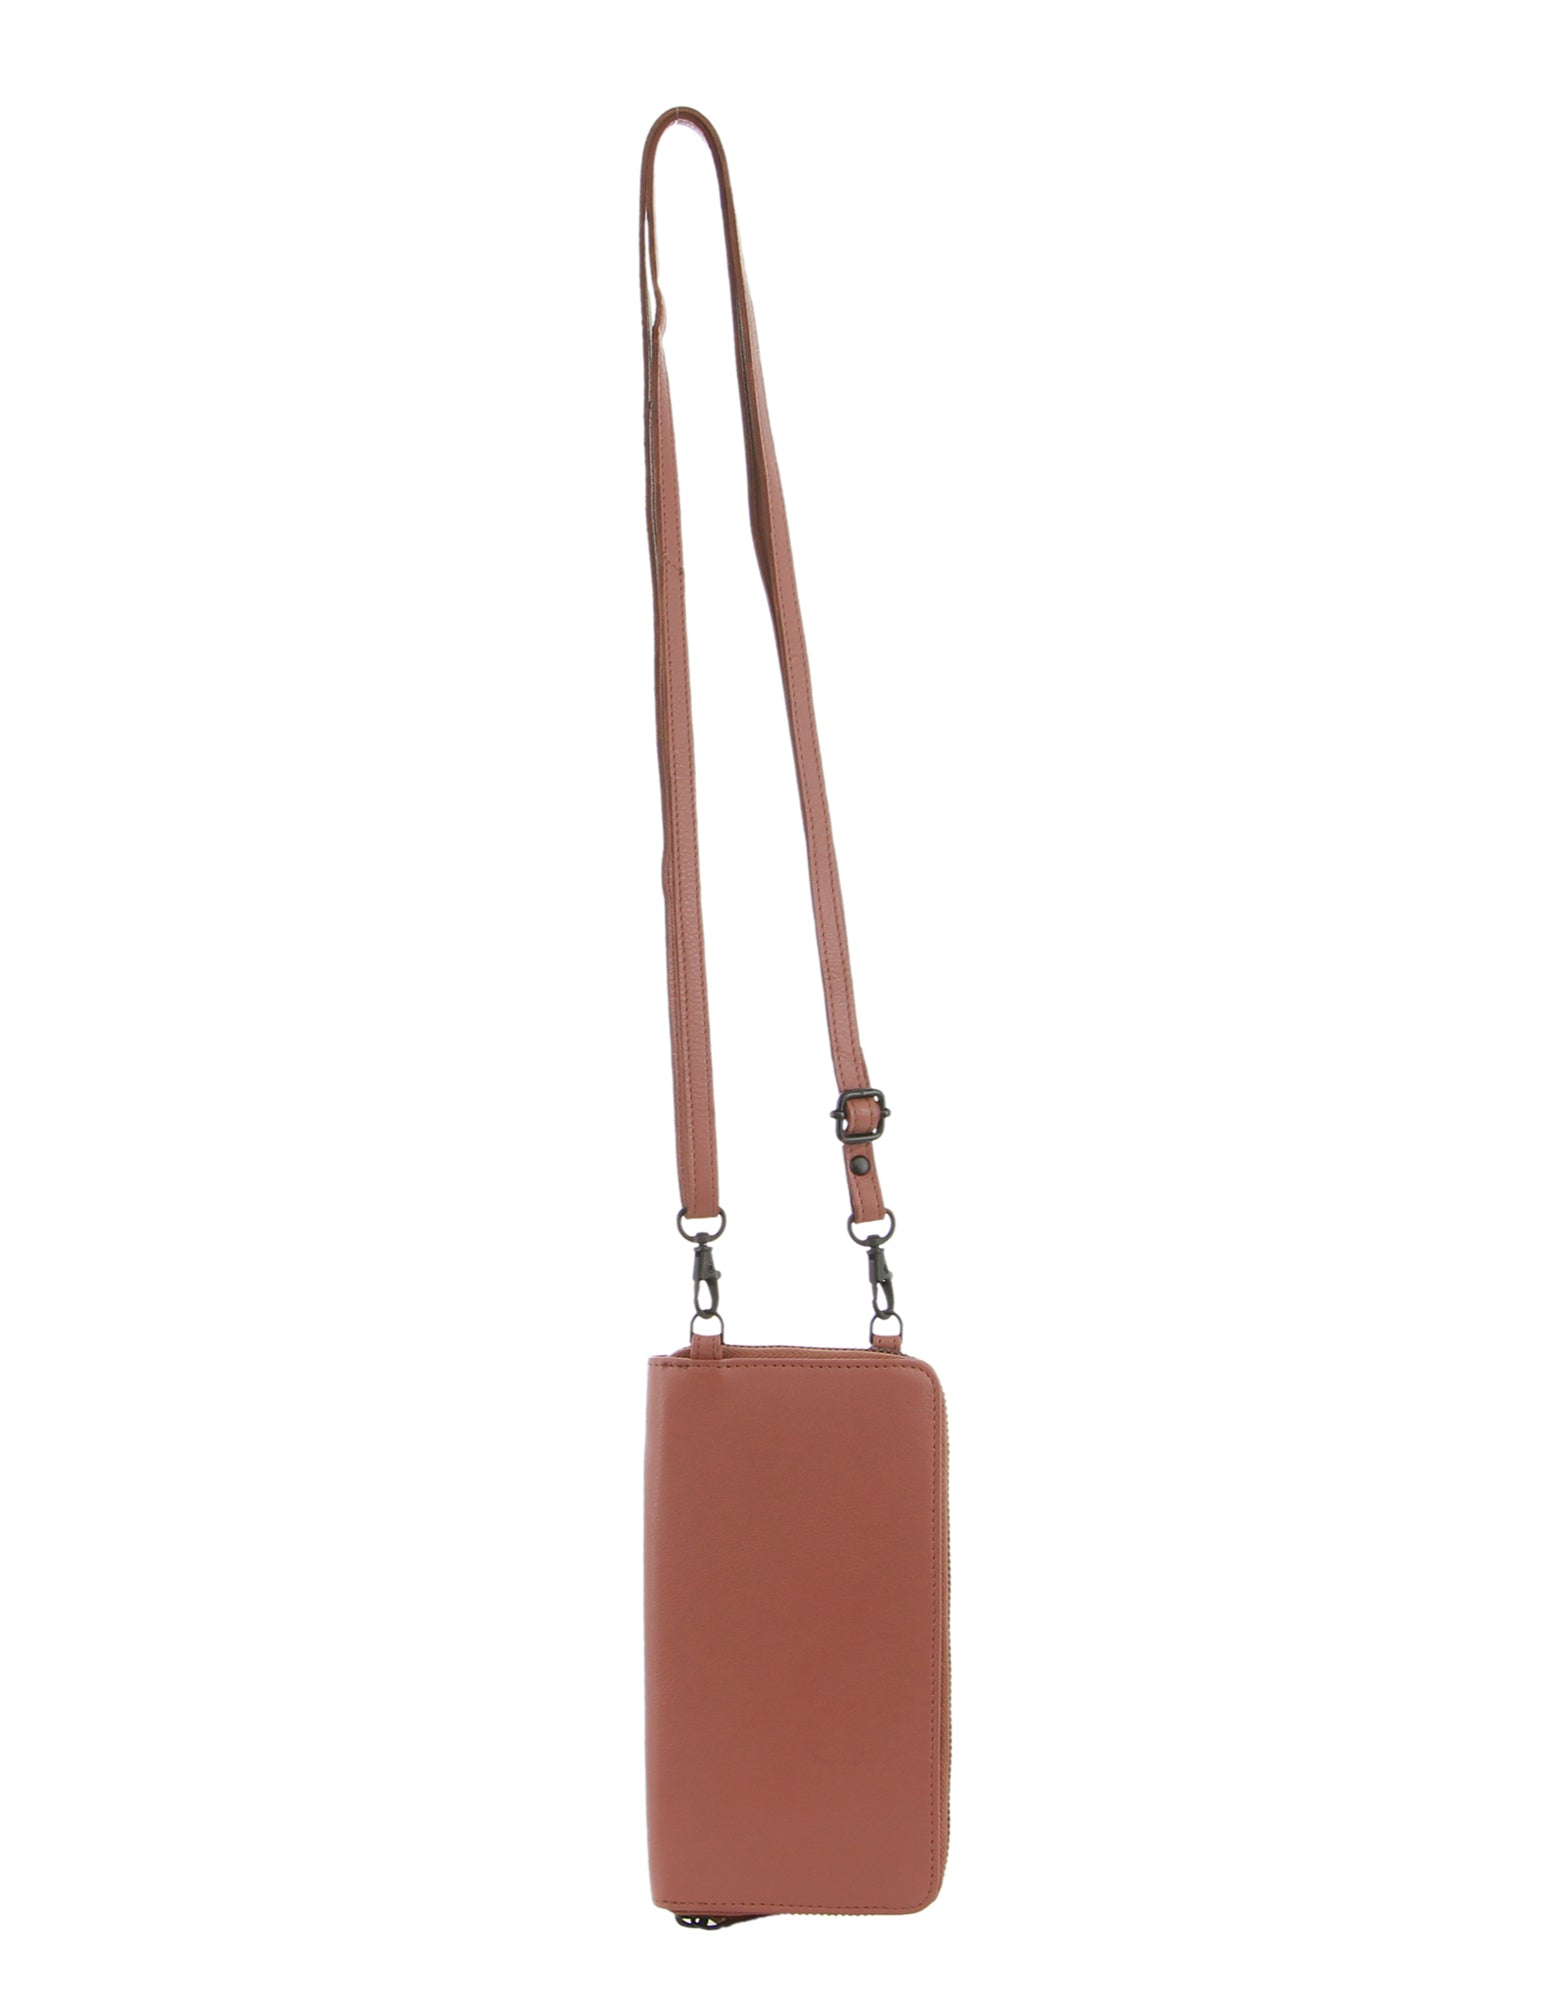 Pierre Cardin Quilted Leather Ladies Phone/Wallet Bag in Zirkon